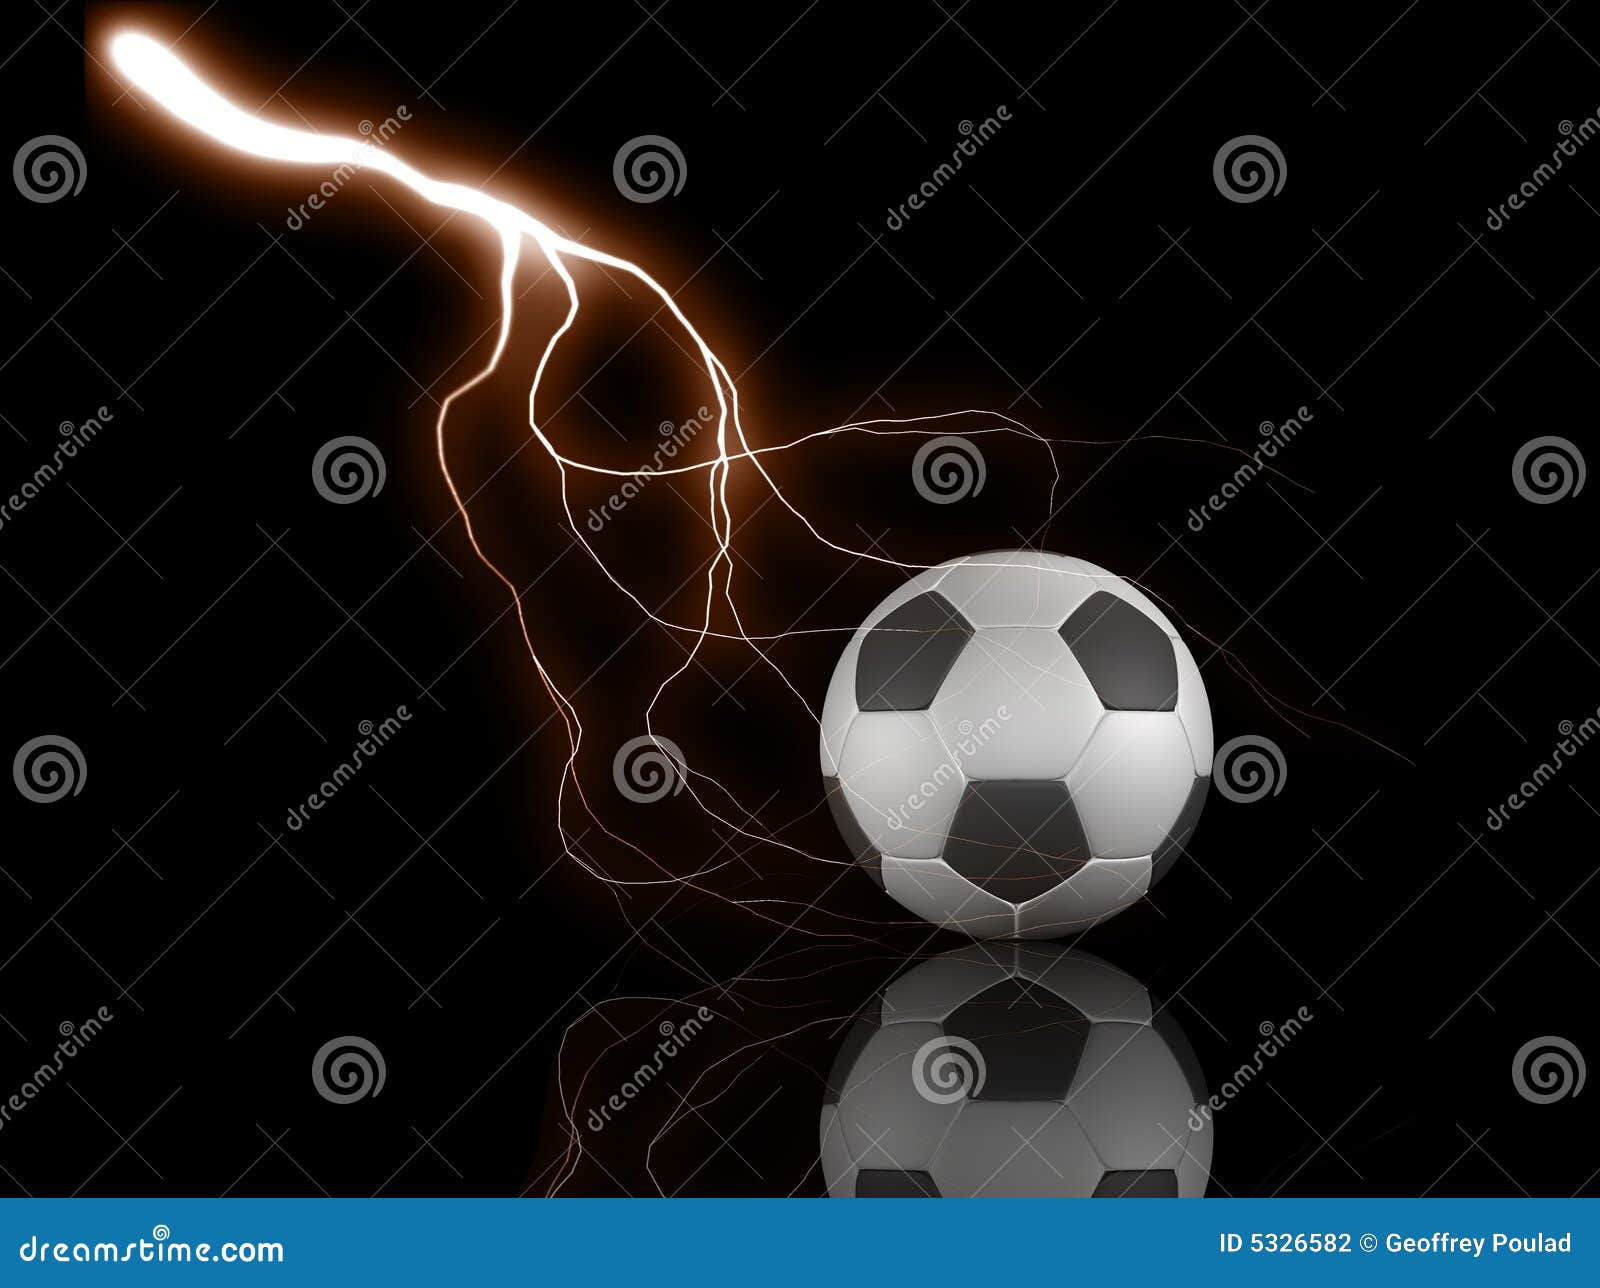 lightning bolt soccer clipart png